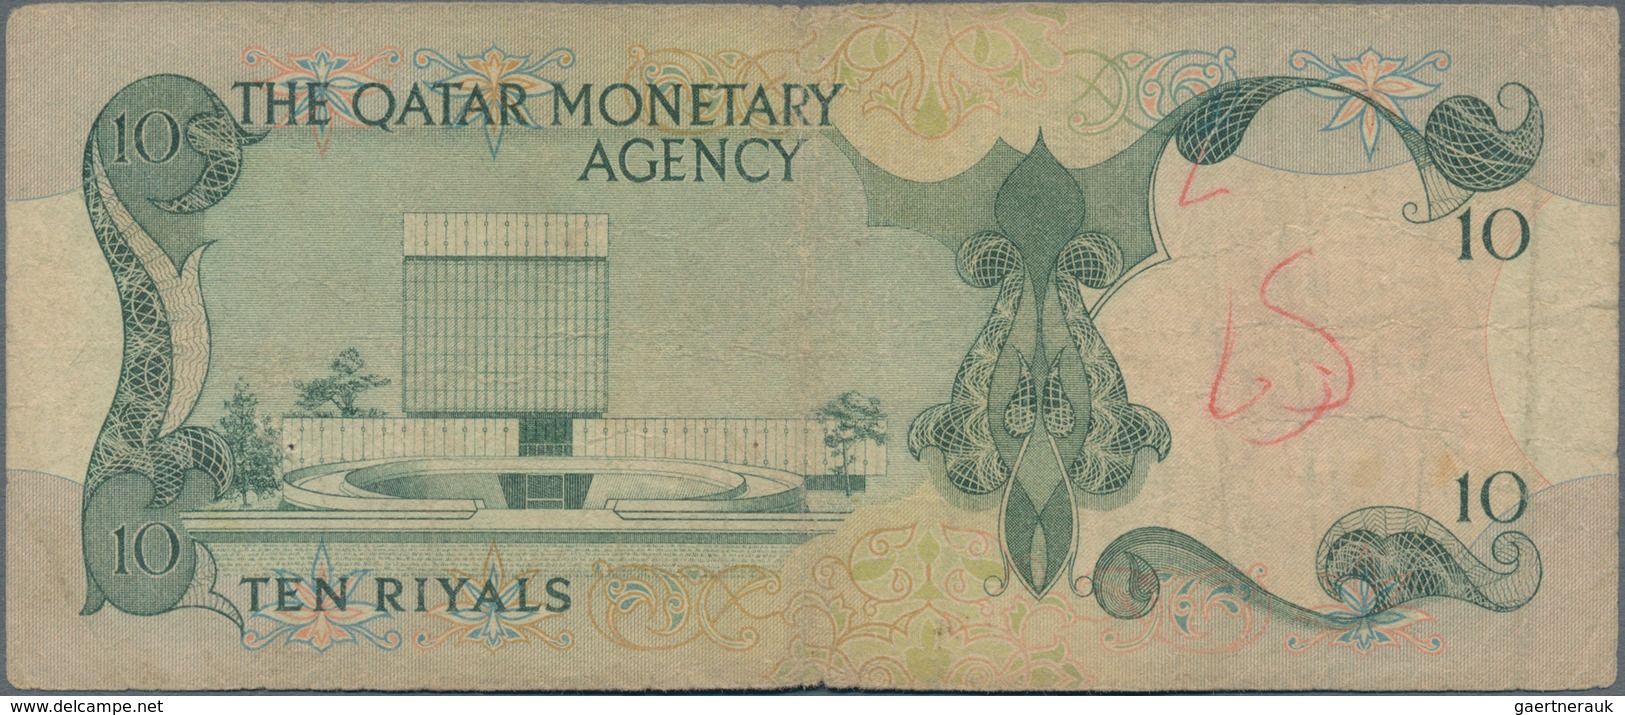 Qatar: The Qatar Monetary Agency 10 Riyals ND(1973), P.3, Small Graffiti On Front And Back, Tiny Pin - Qatar